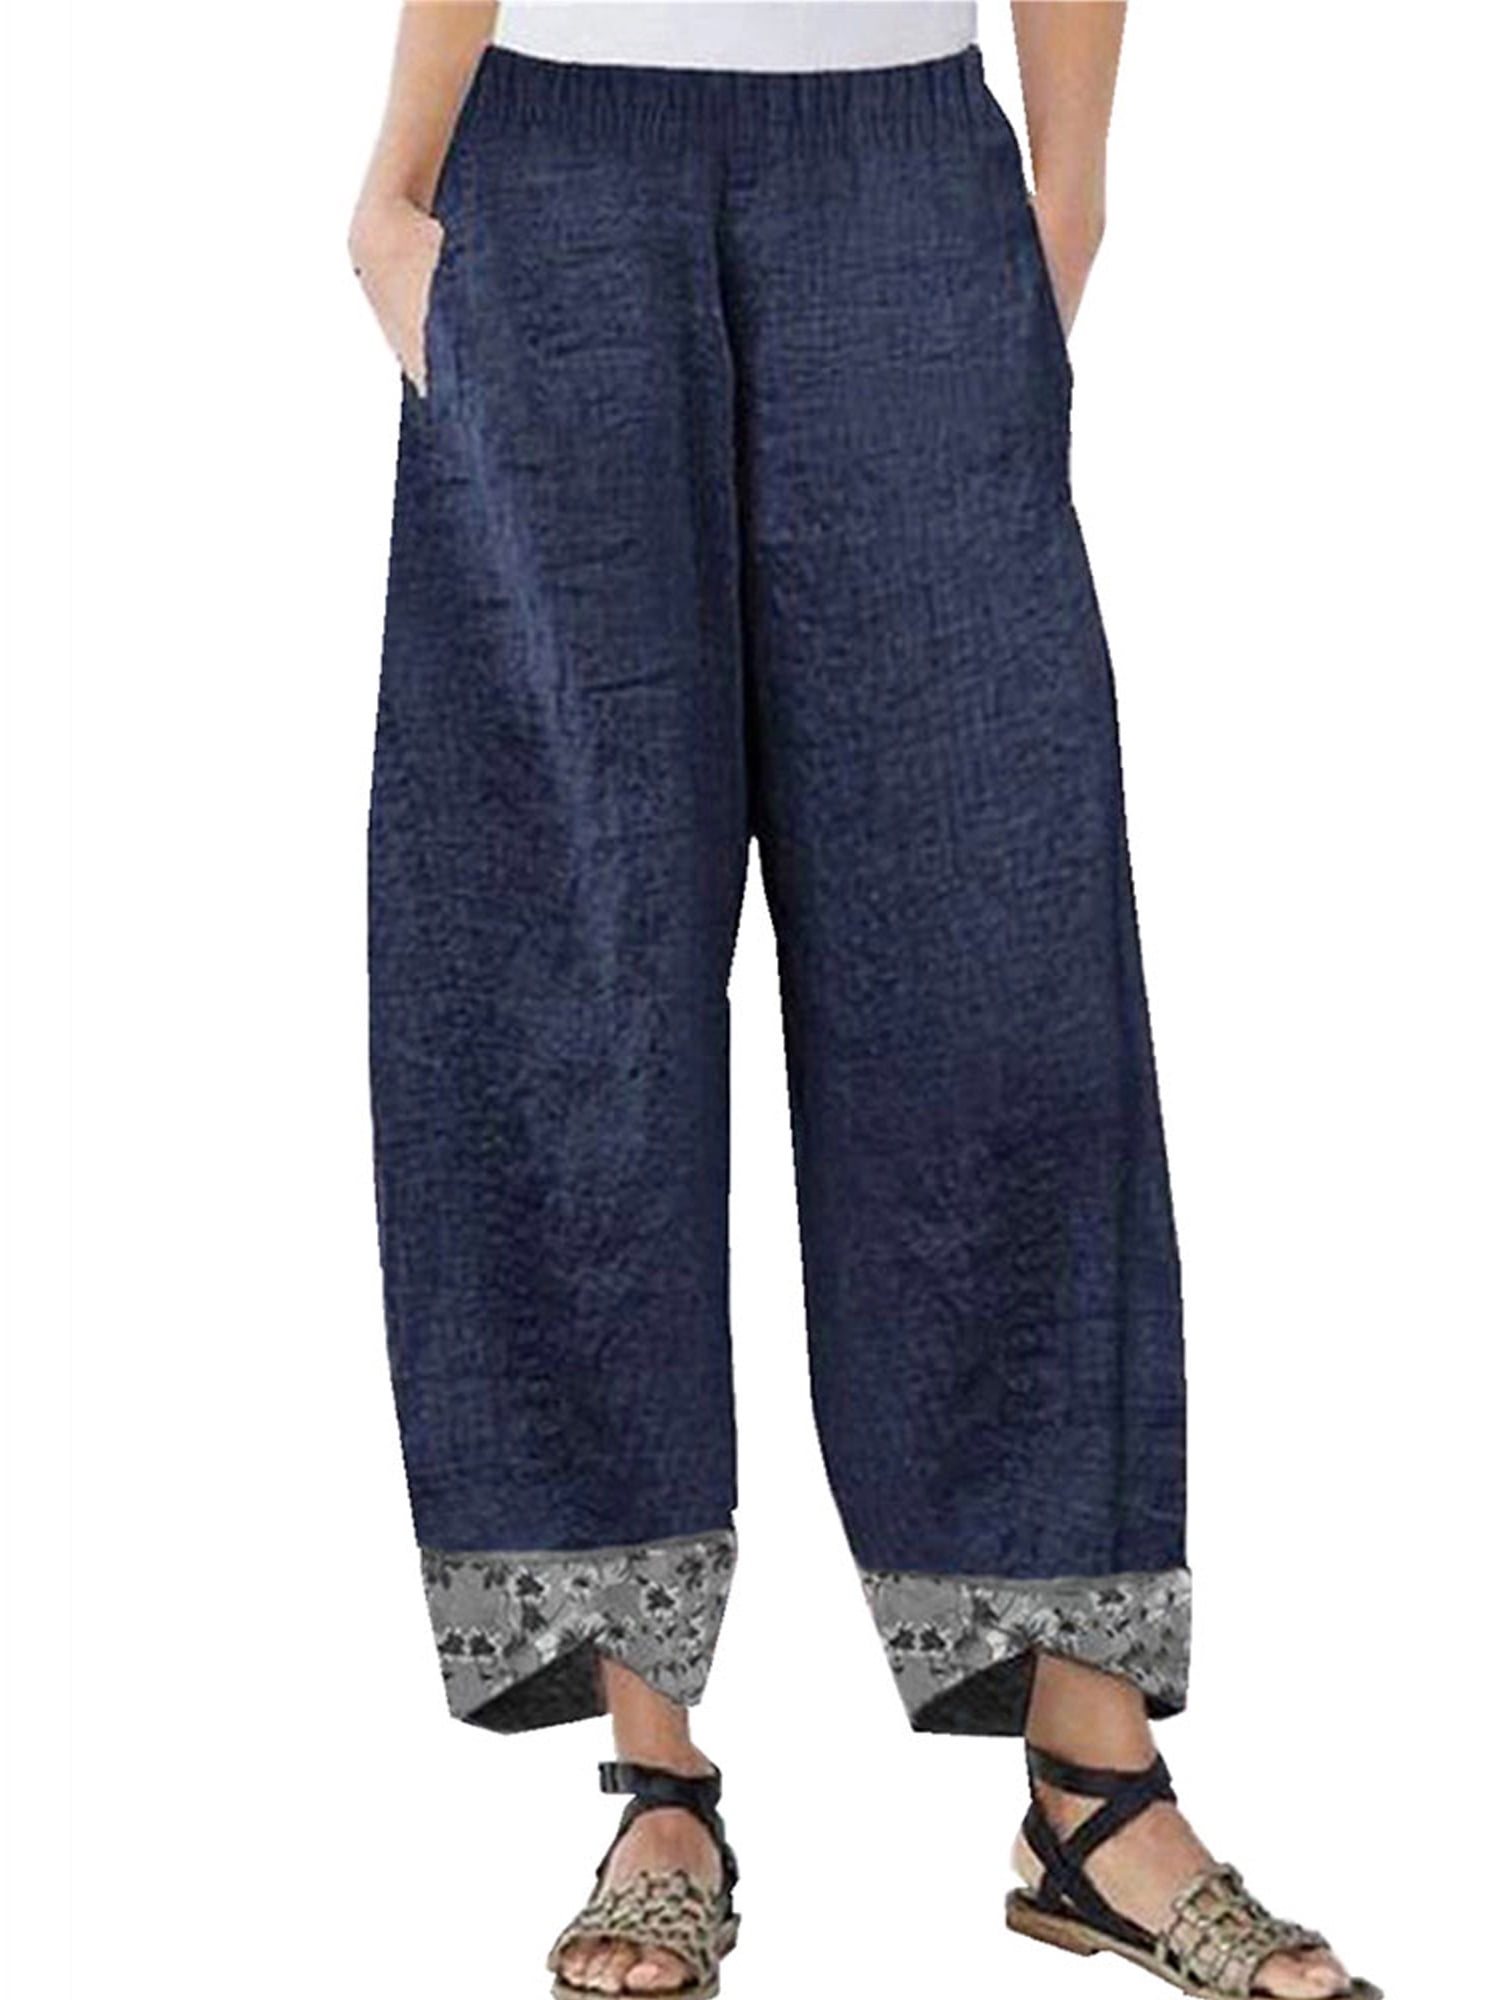 UPAIRC Womens Plus Size Harem Pants Elastic Waist Casual Trousers Deep ...